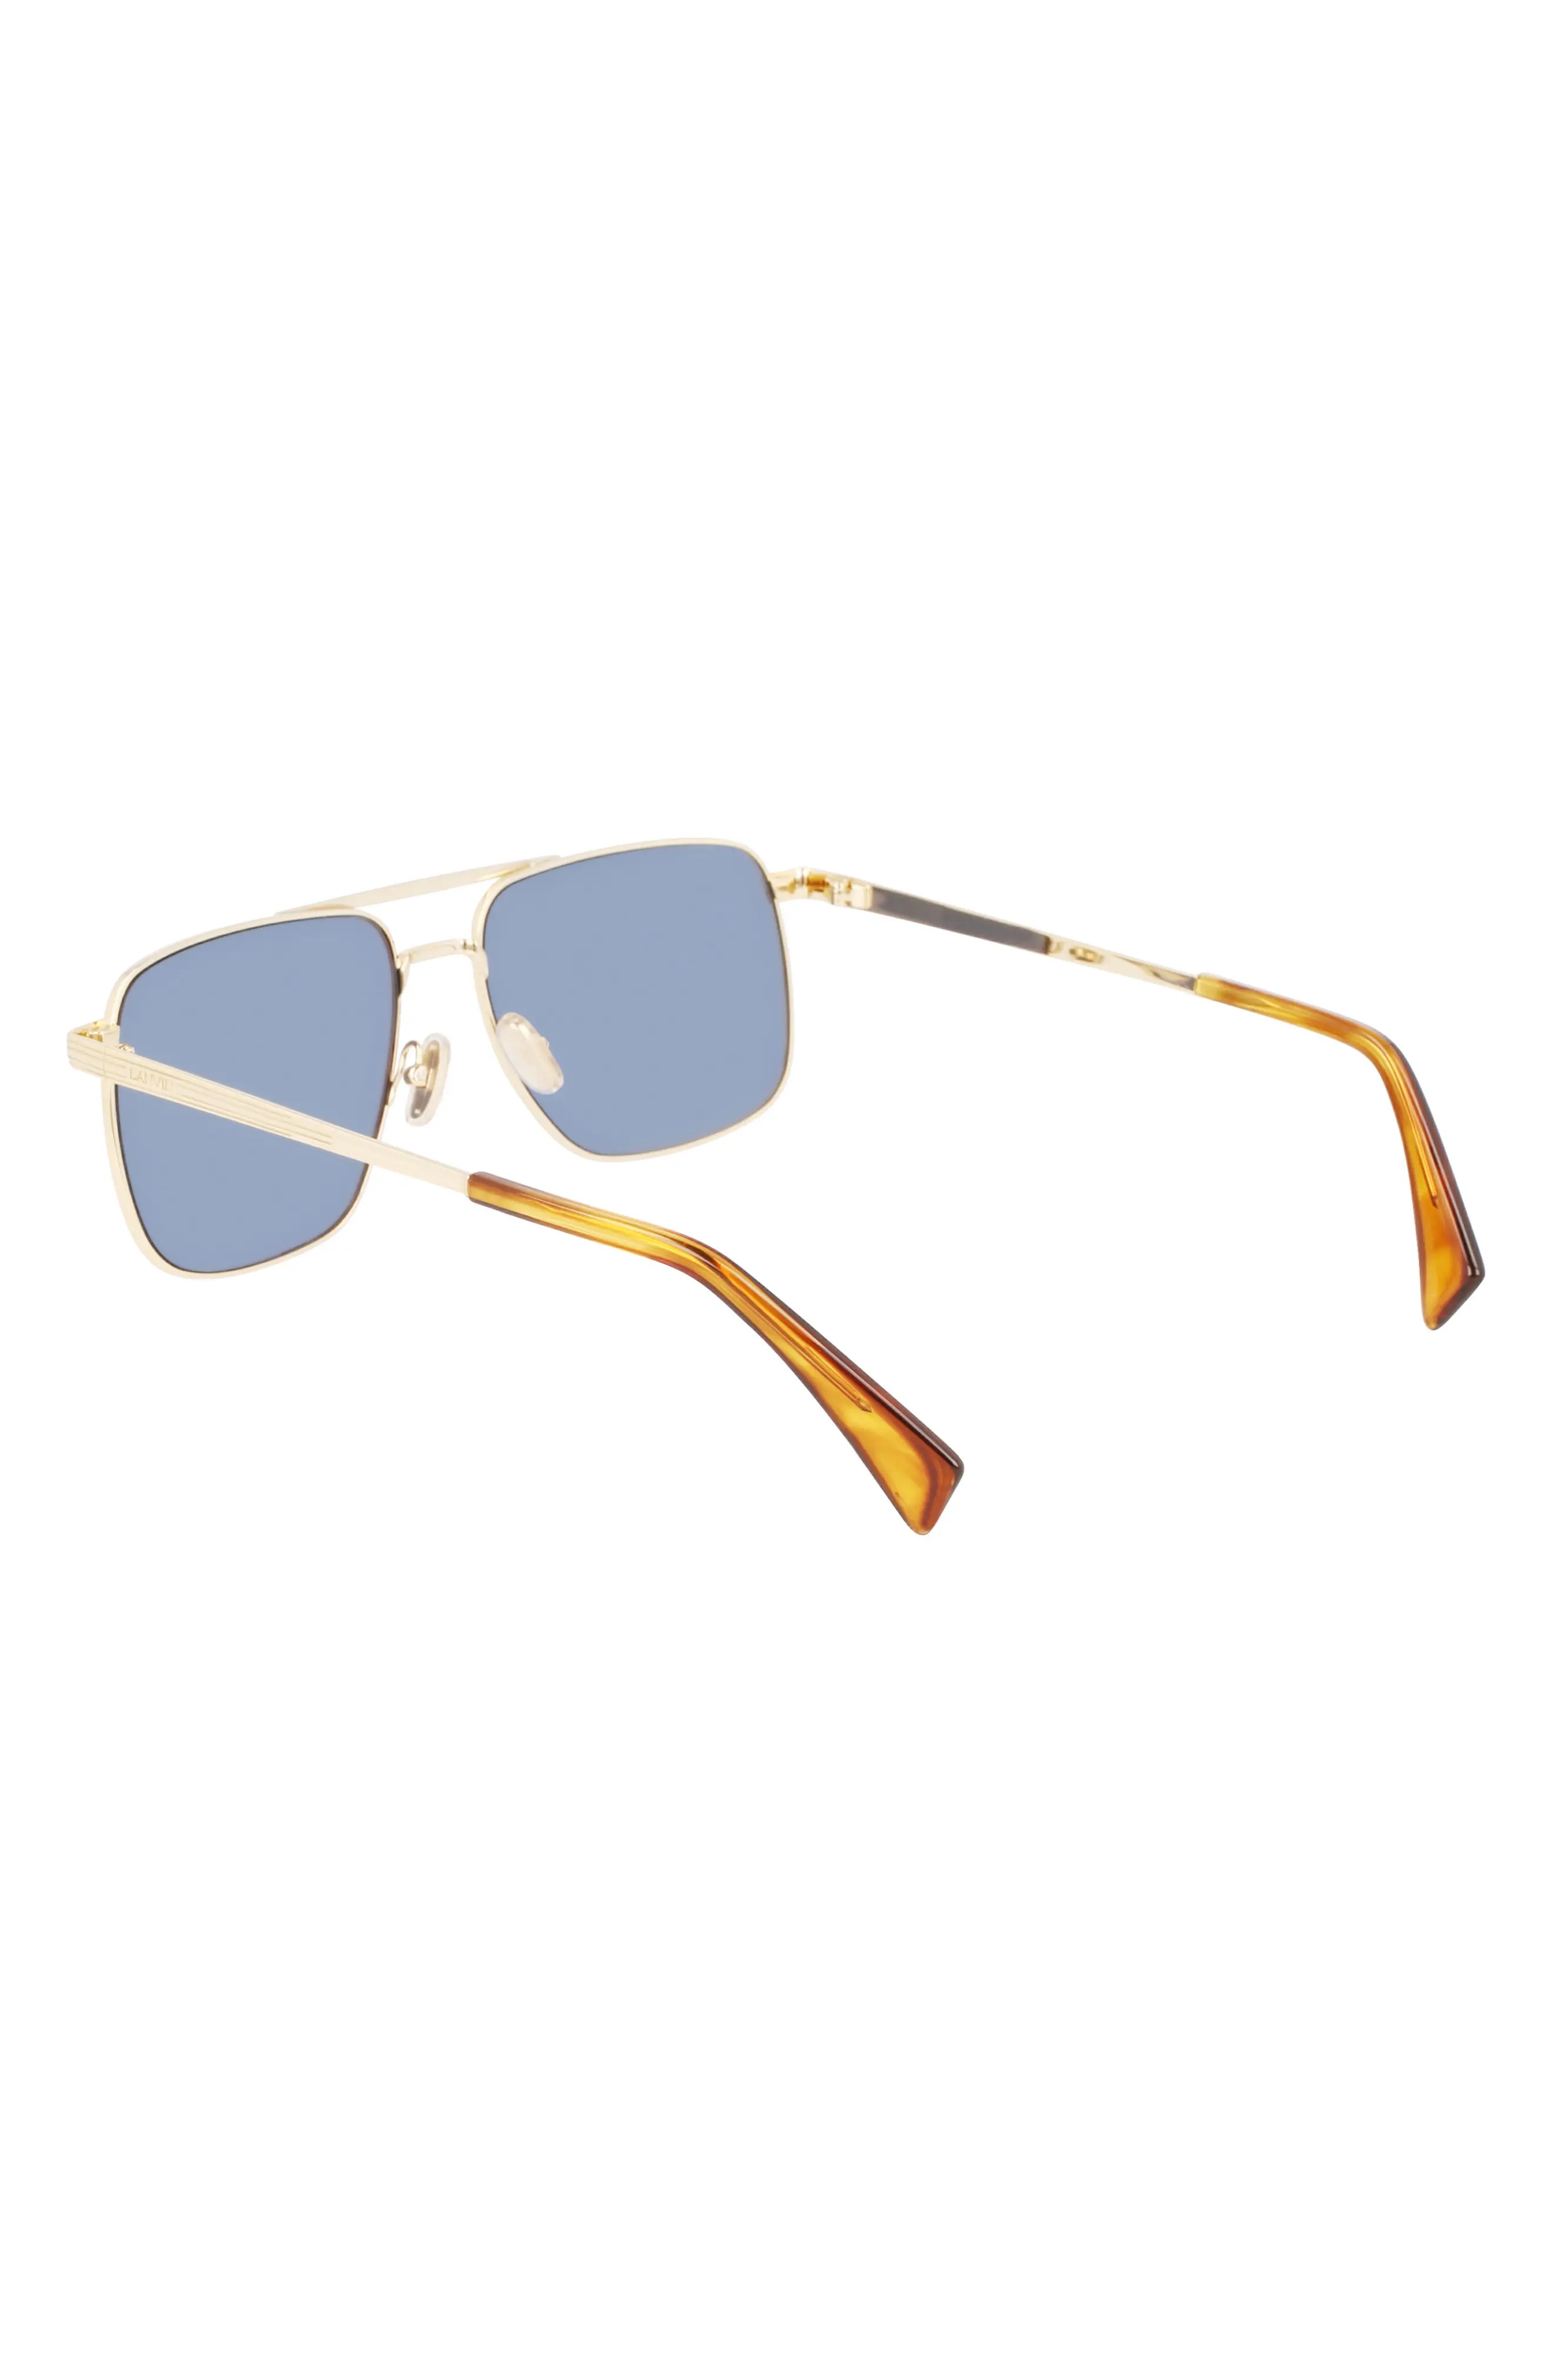 JL 58mm Rectangular Sunglasses in Gold /Blue - 3